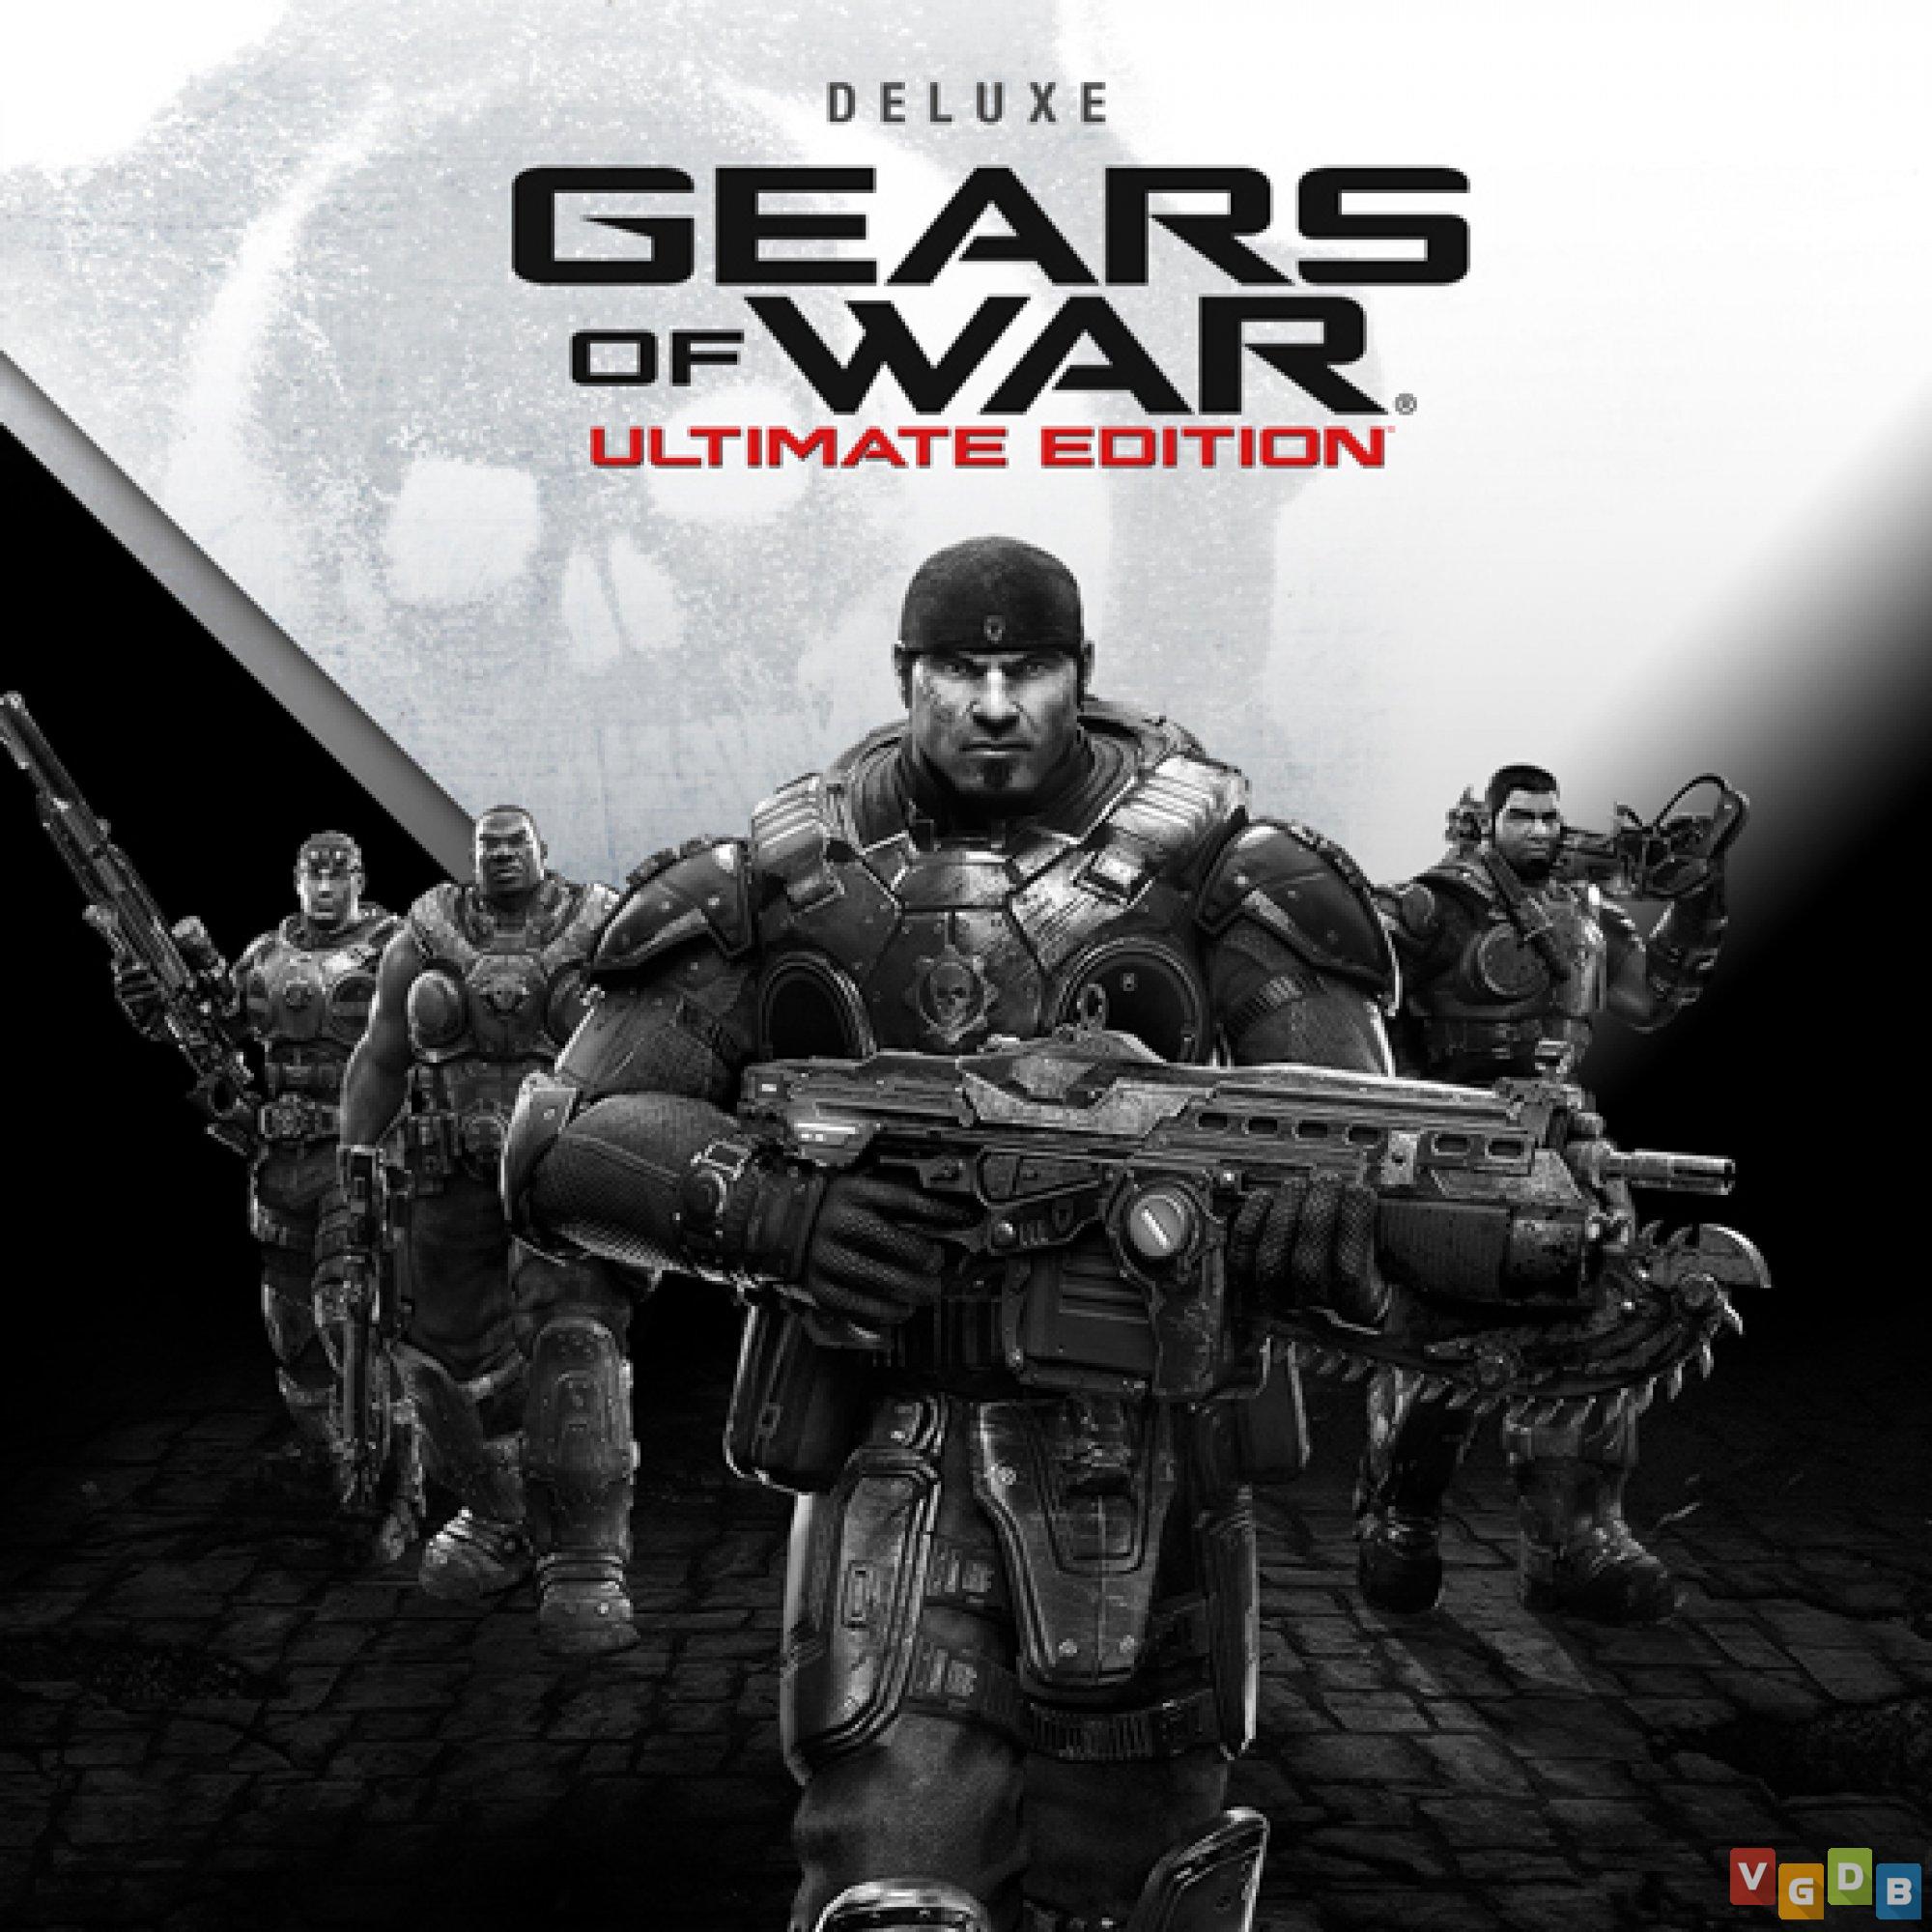 gears tactics console release date